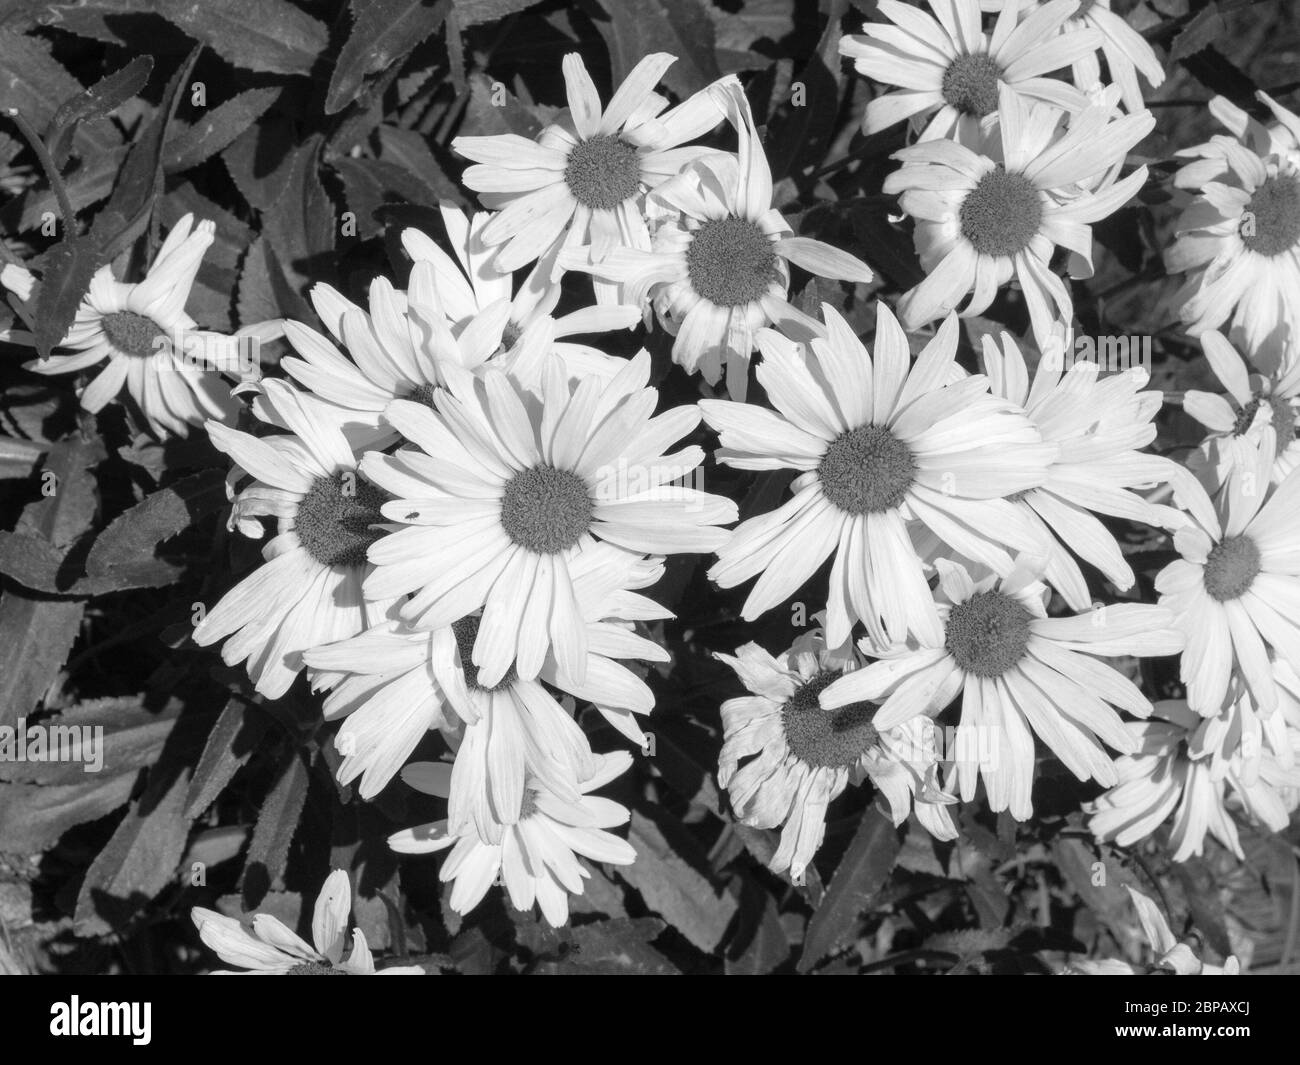 Black and white of daisies. Stock Photo